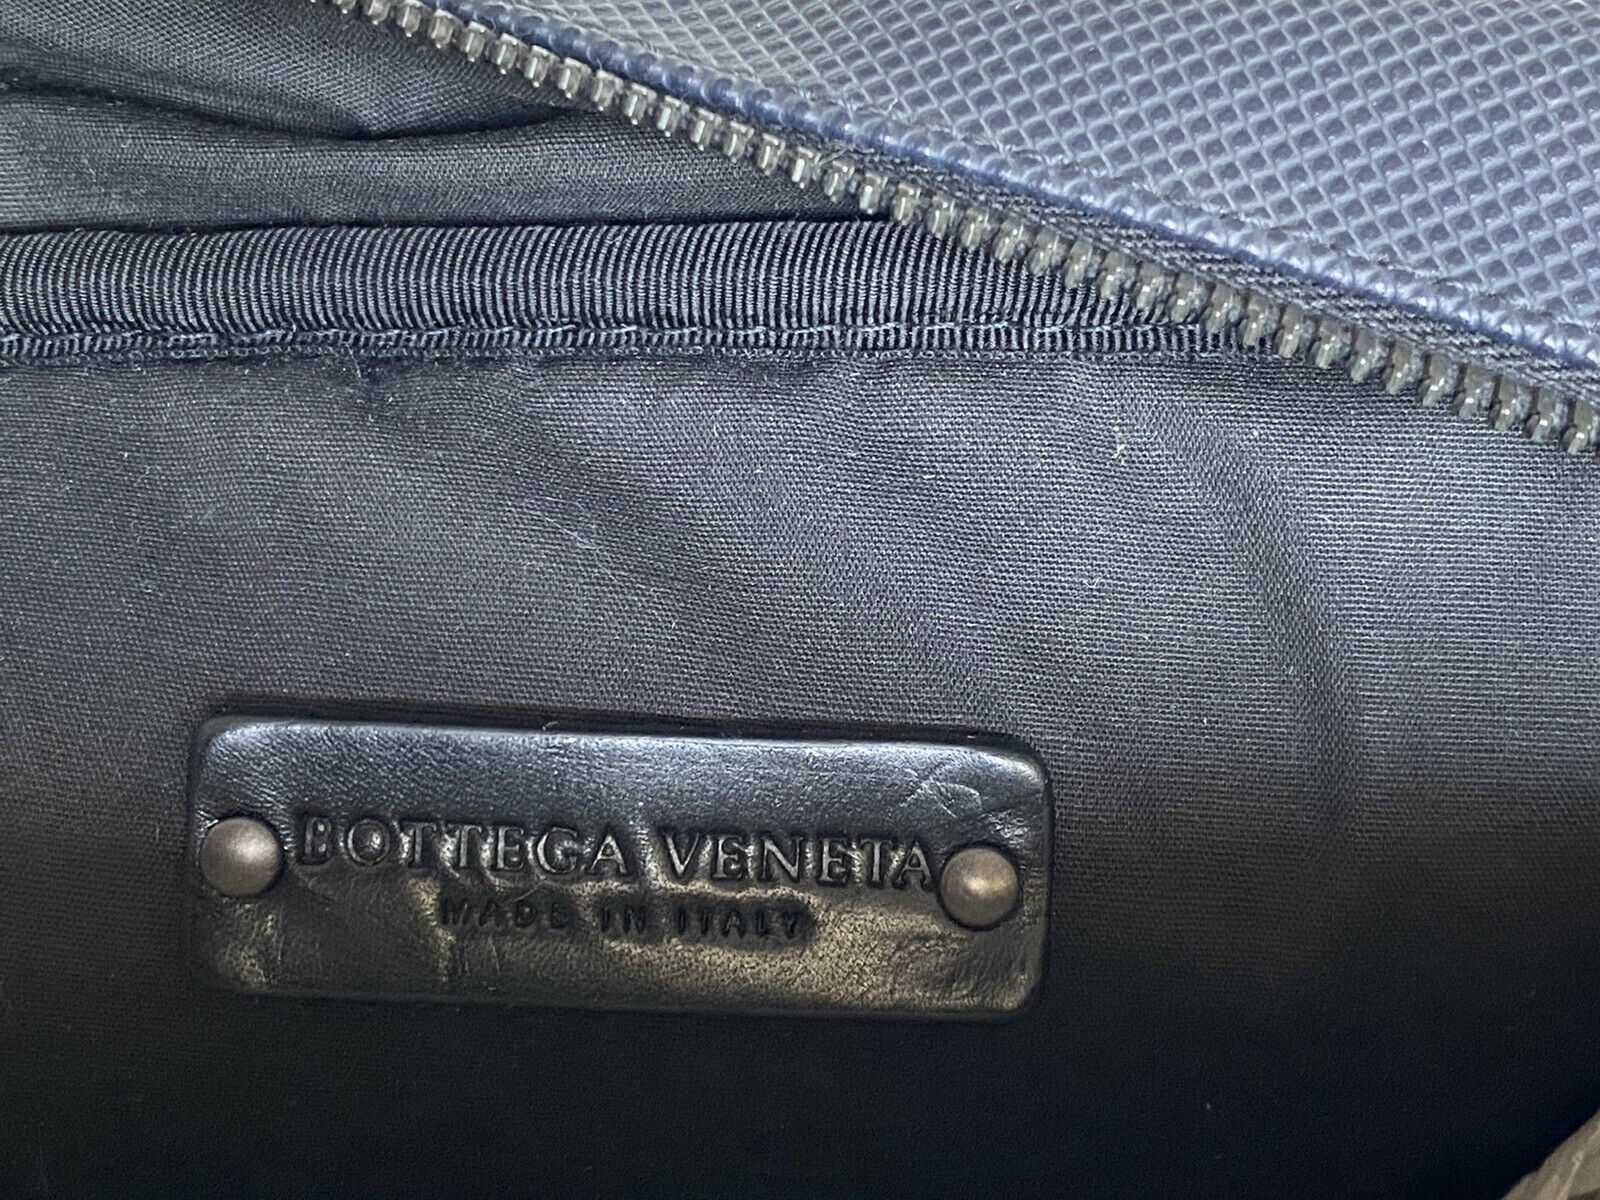 New $1450 Bottega Veneta Men's Marcopolo Navy Leather Travel Bag Italy 167304